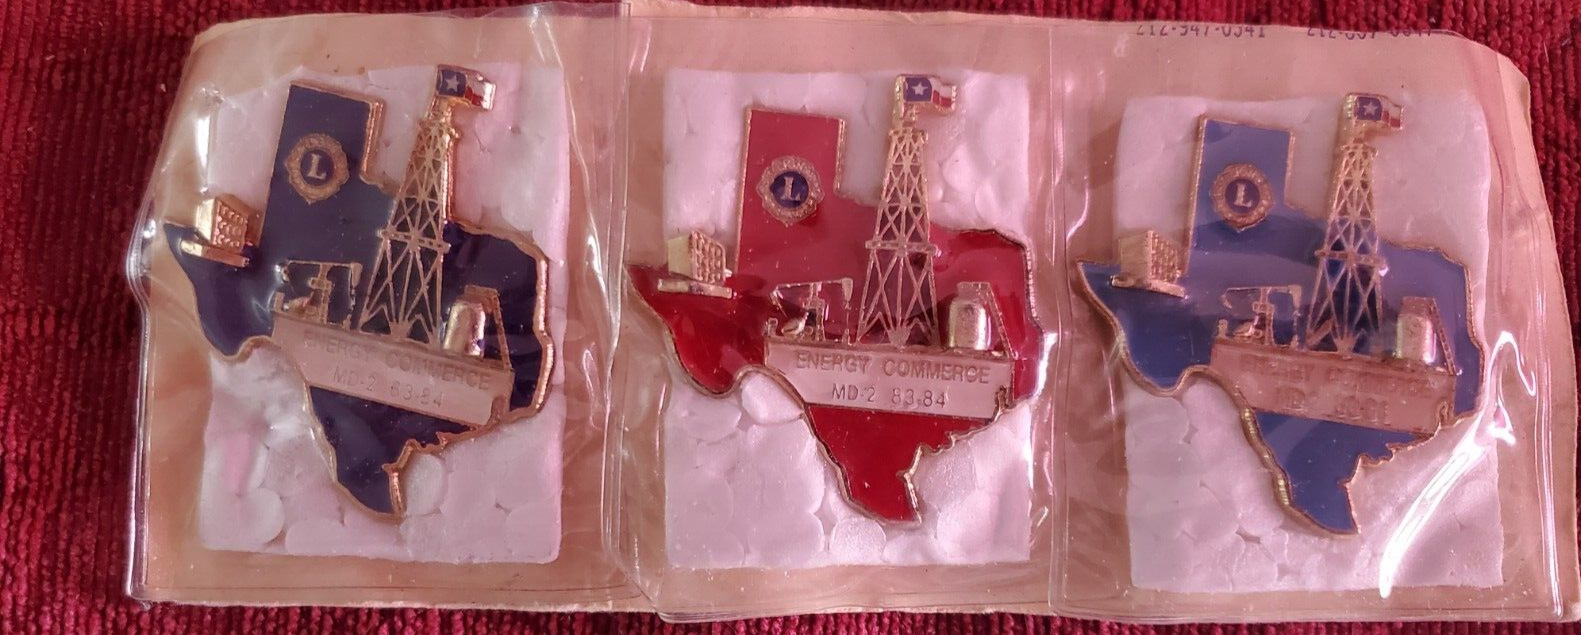 Lions Club Pins Texas Oil Well Pins (Very Rare)